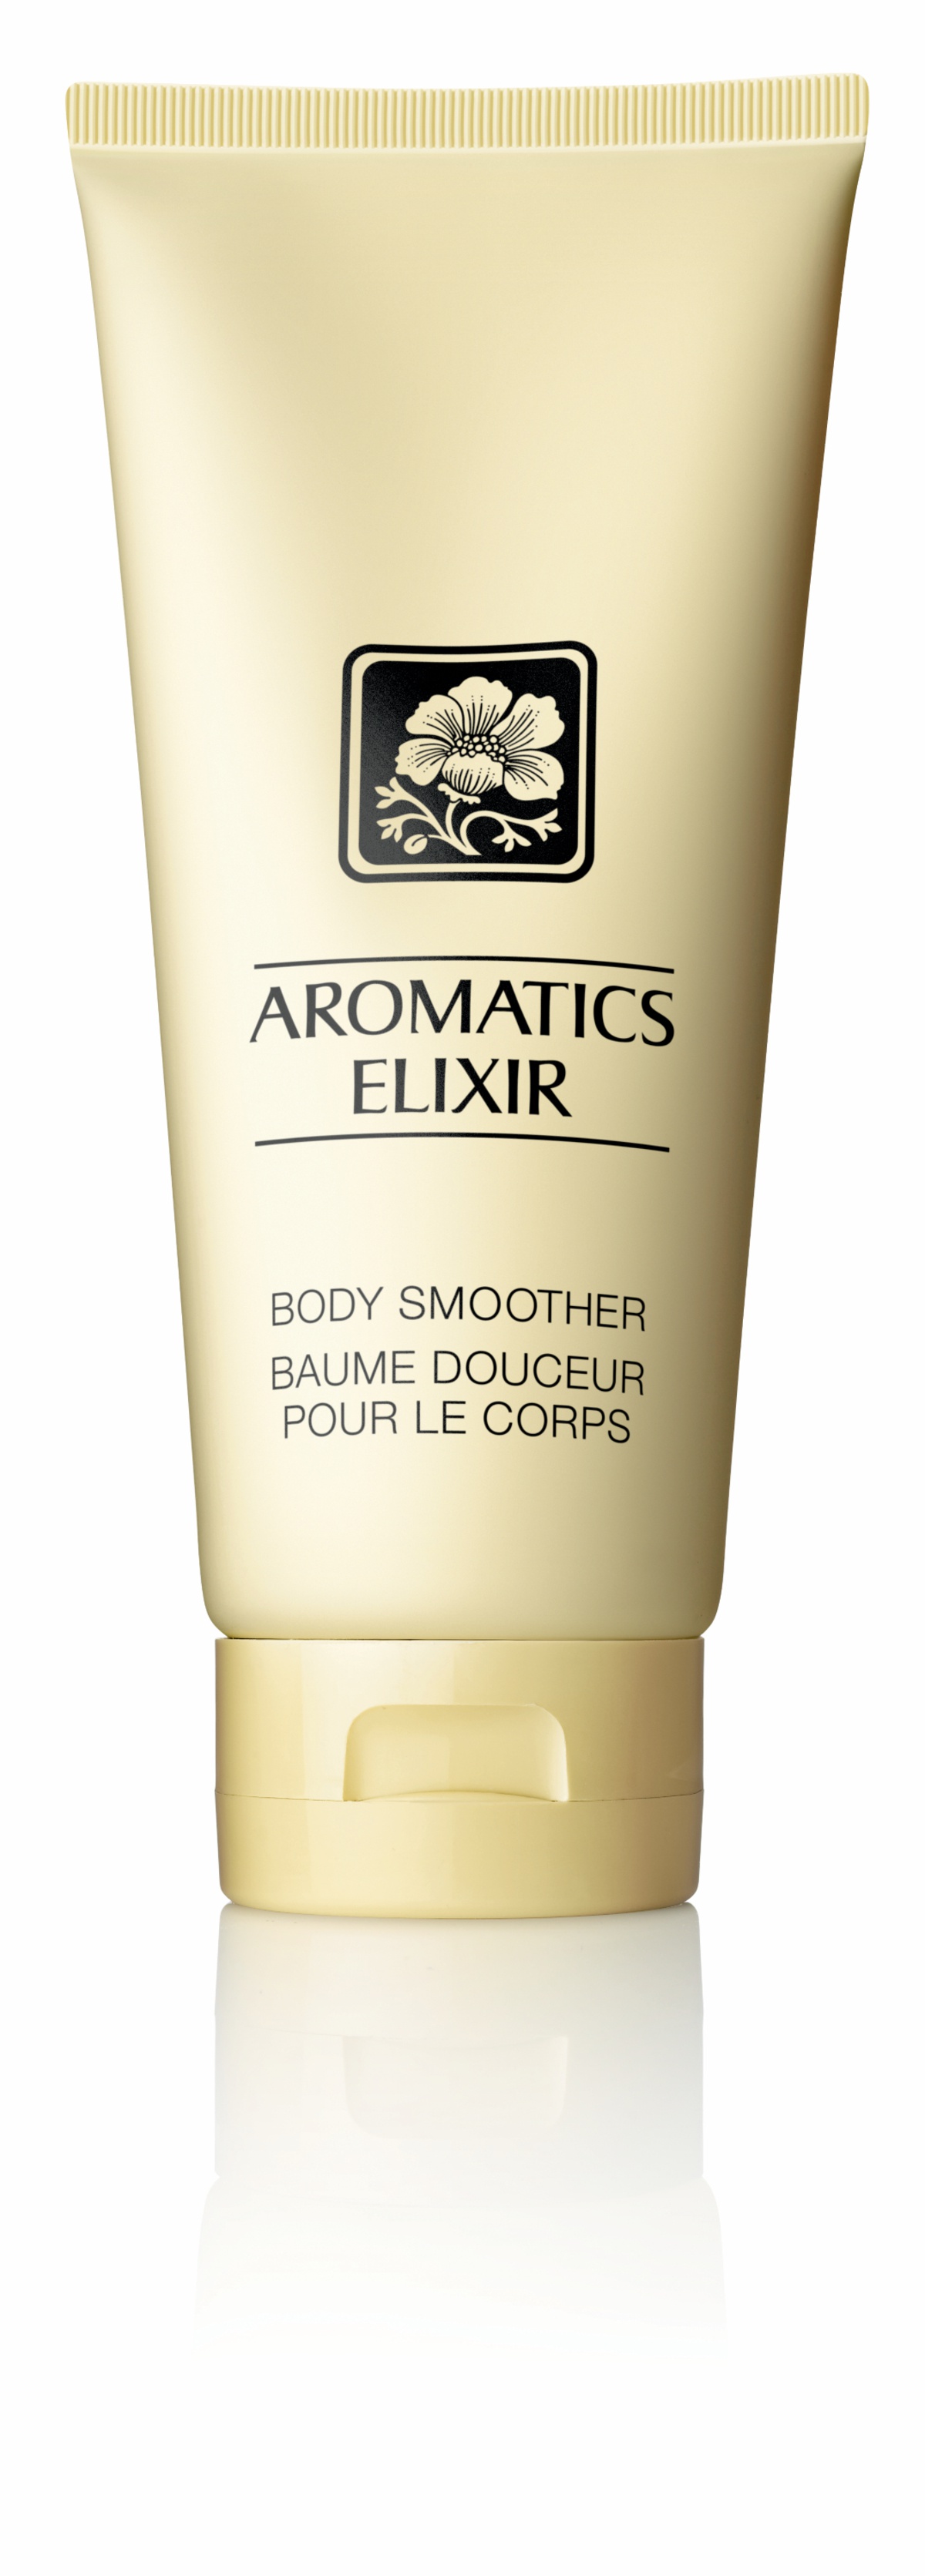  Aromatics Elixir Body Smoother